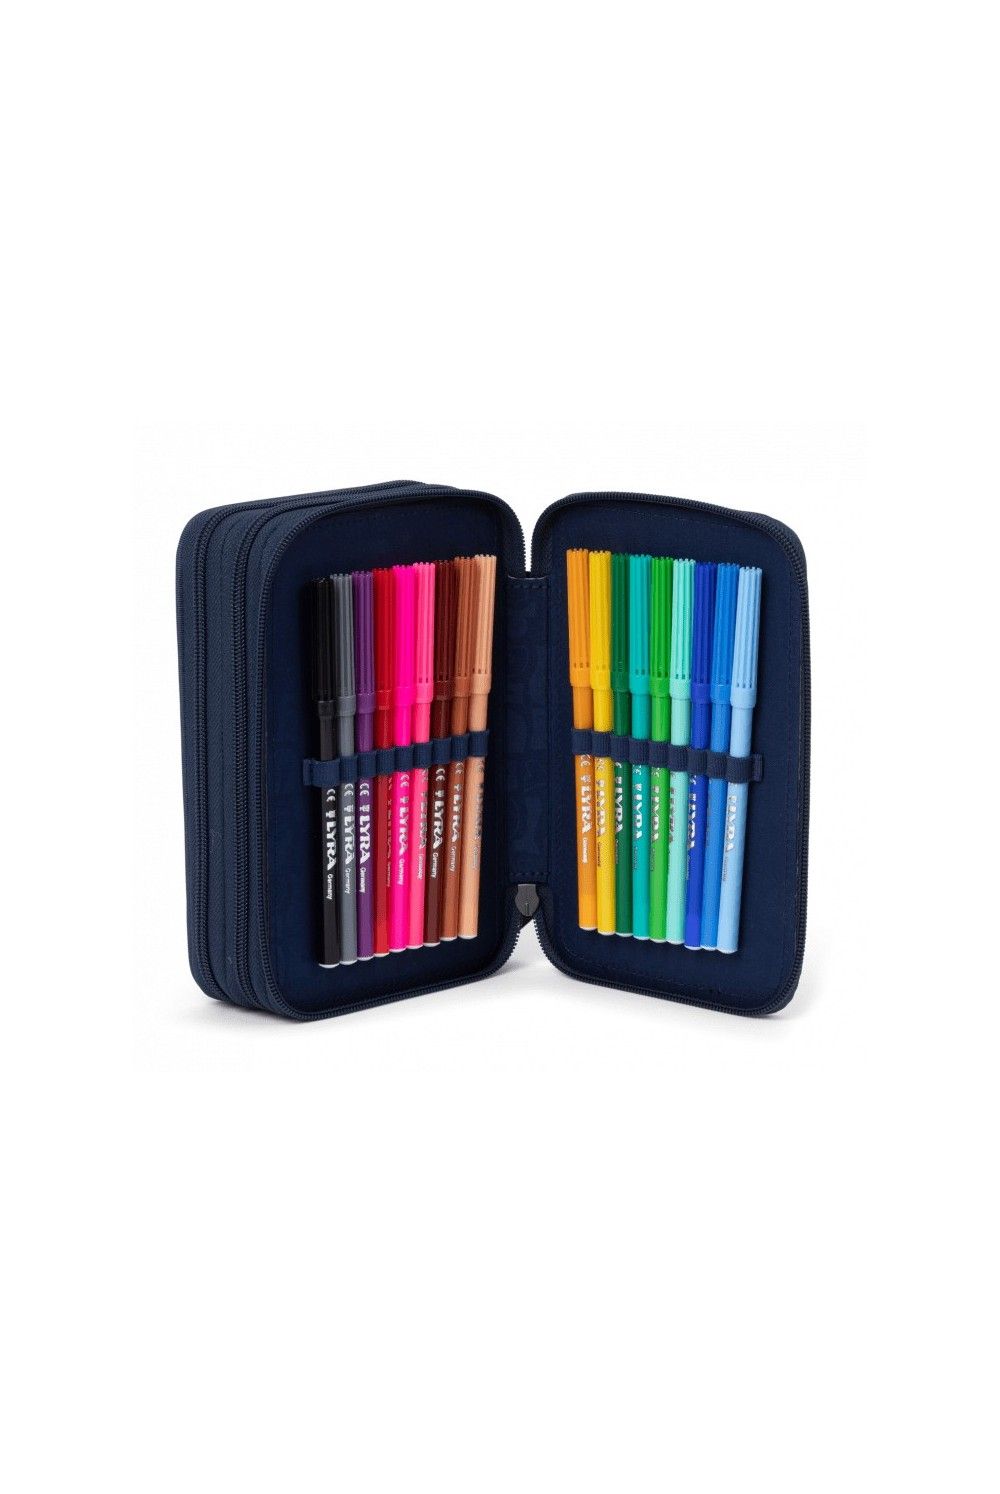 Ergobag maxi pencil case TriBäratops